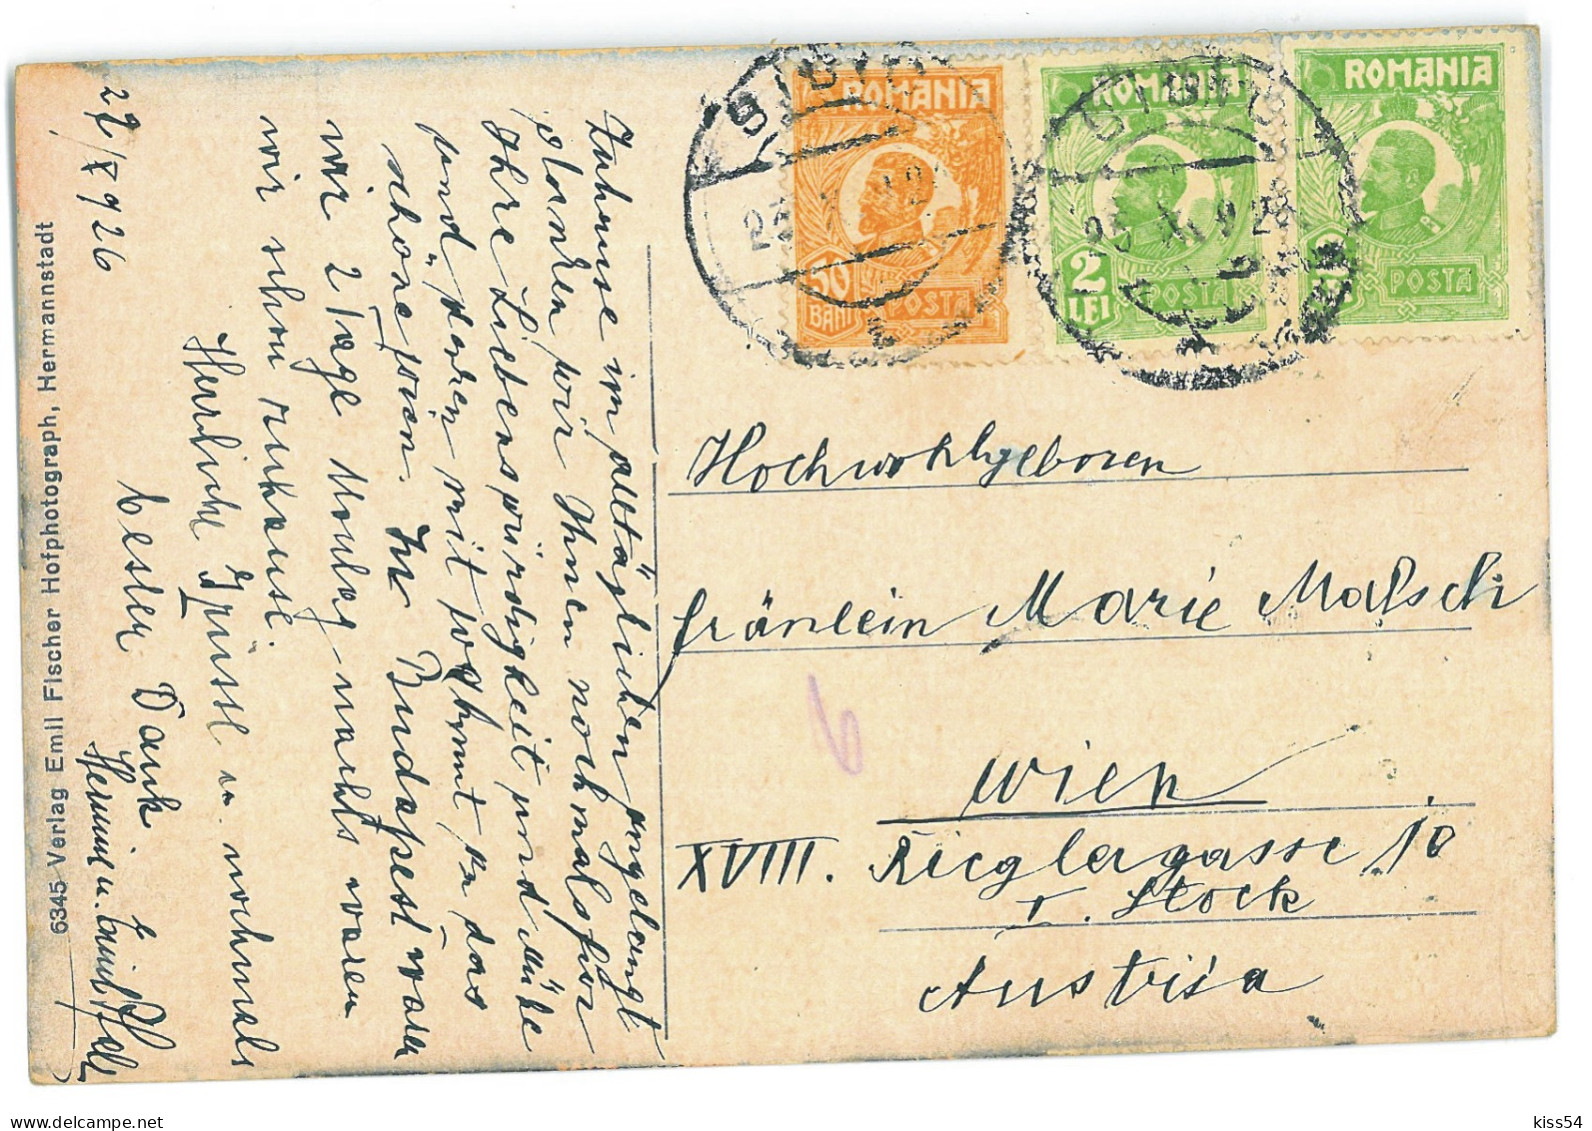 RO 09 - 22407 SIBIU, Tramway, Romania - Old Postcard - Used - 1926 - Roumanie